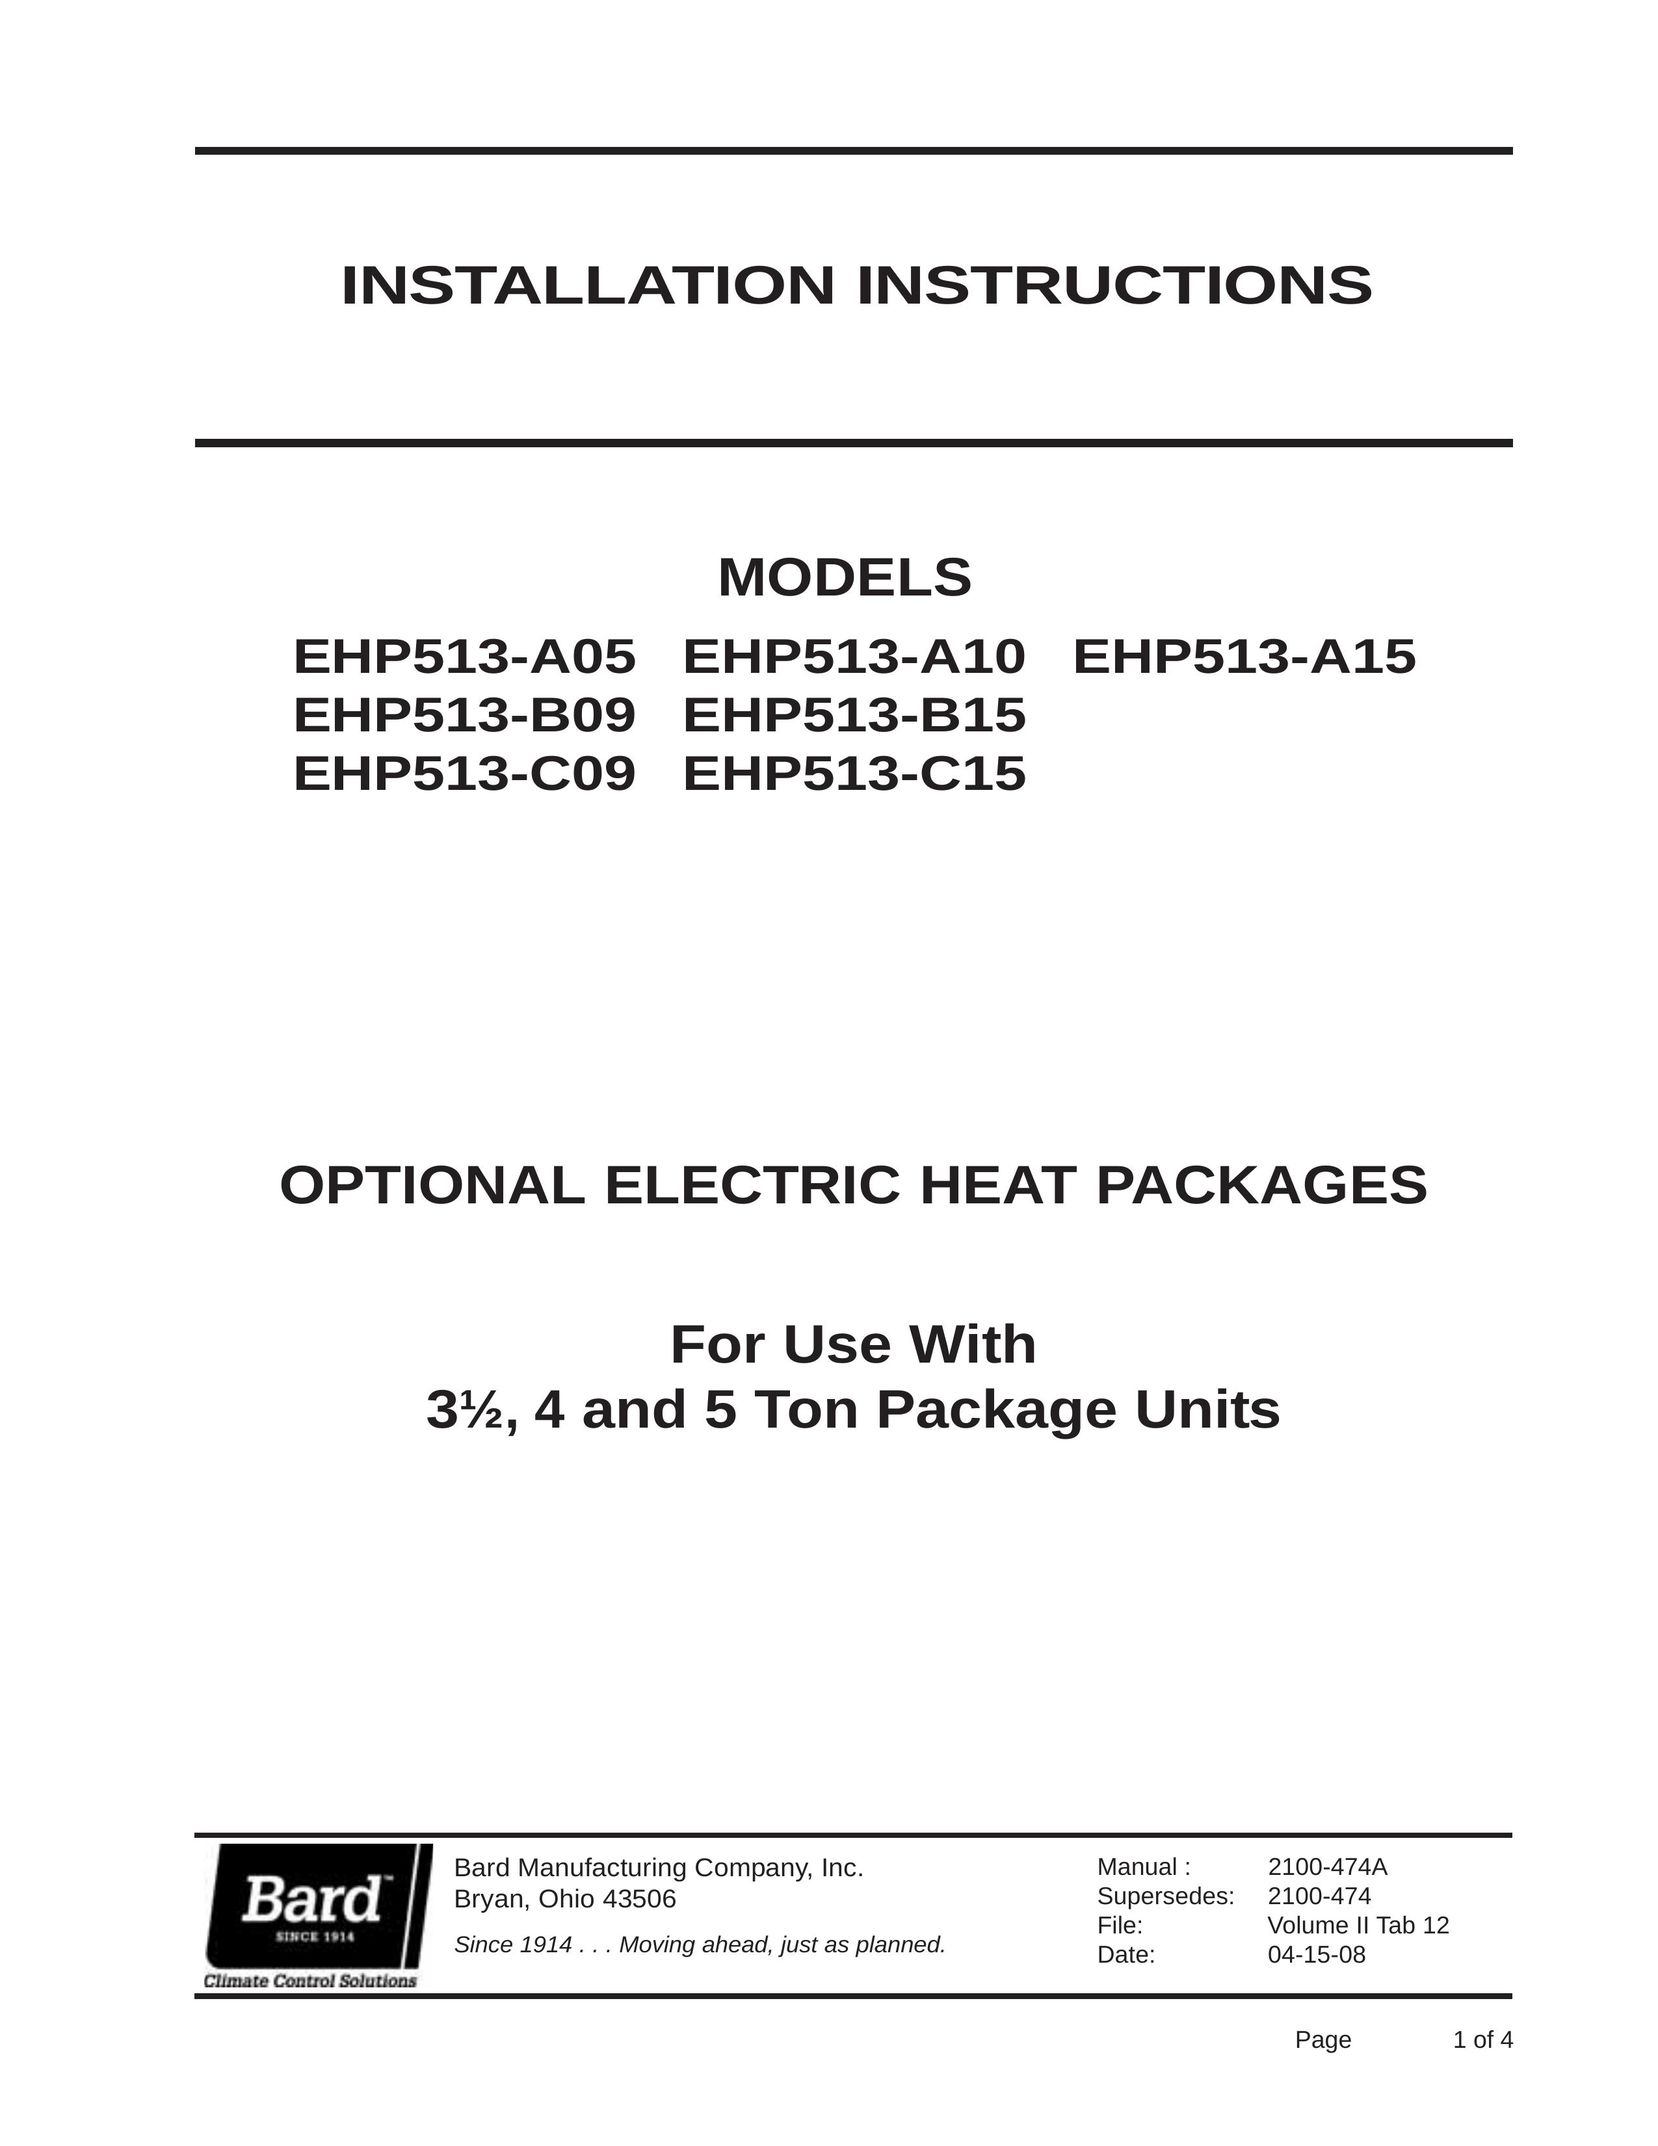 Bard EHP513-C15 Heating System User Manual